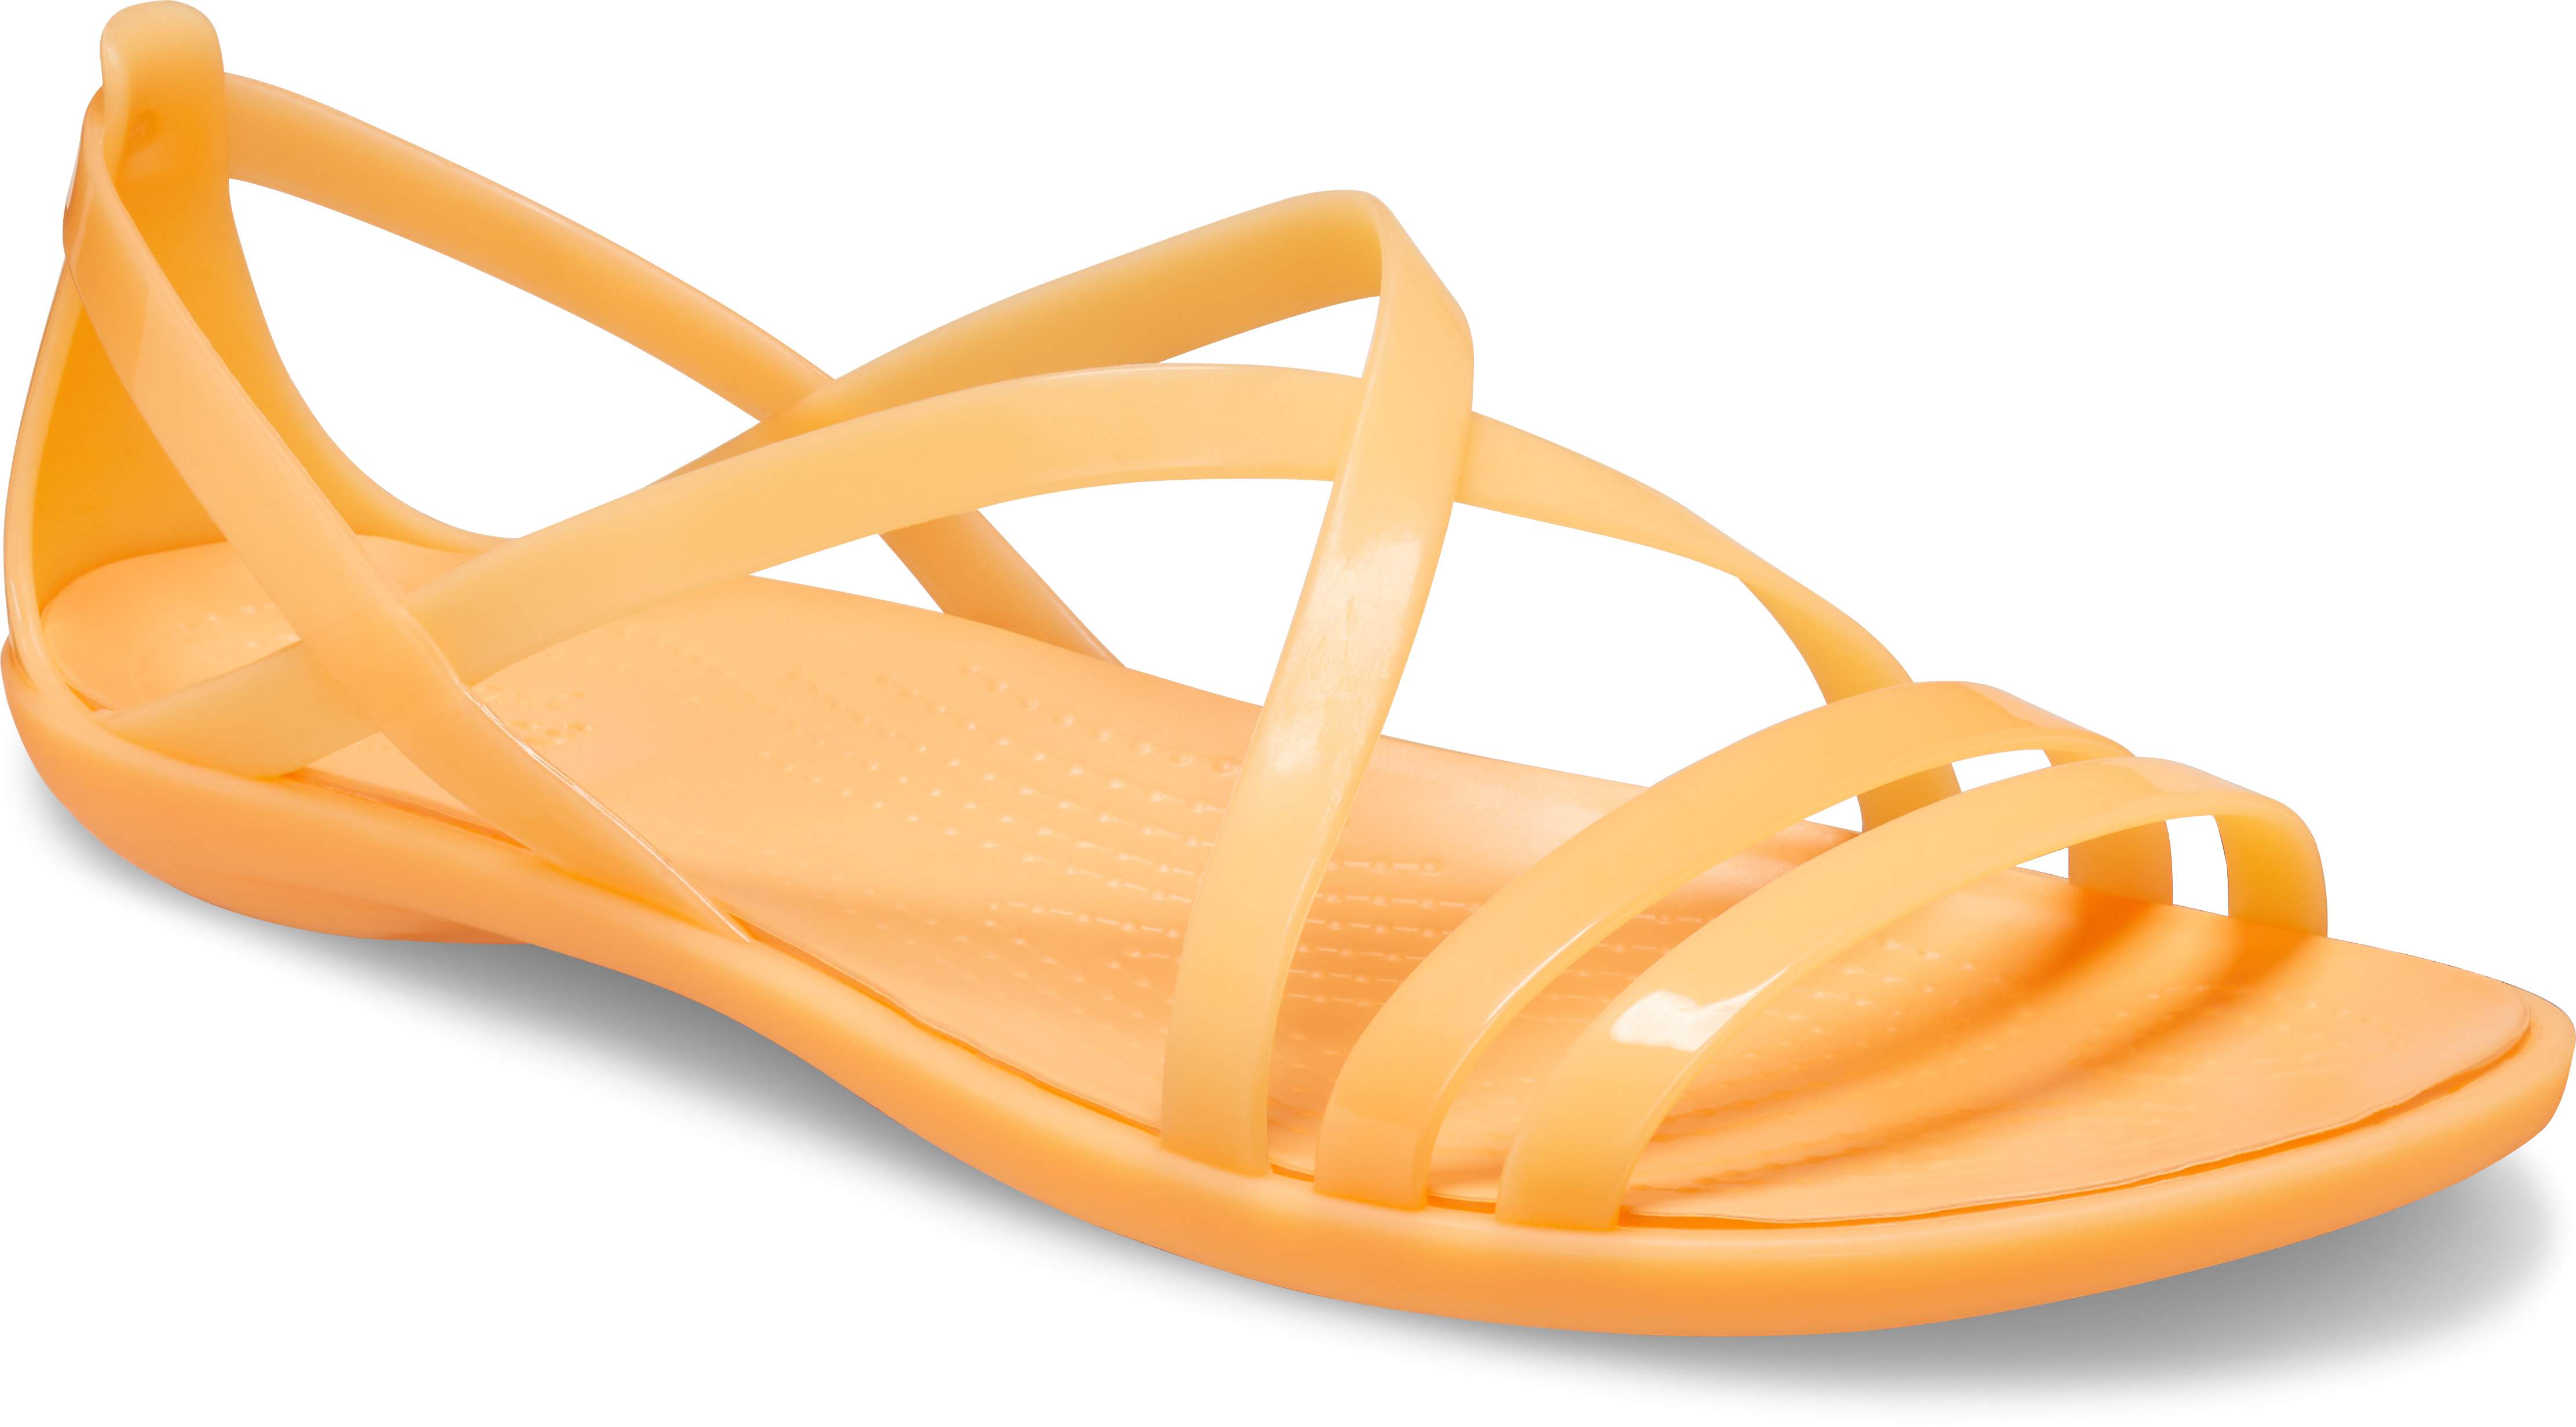 crocs women's isabella strappy sandal